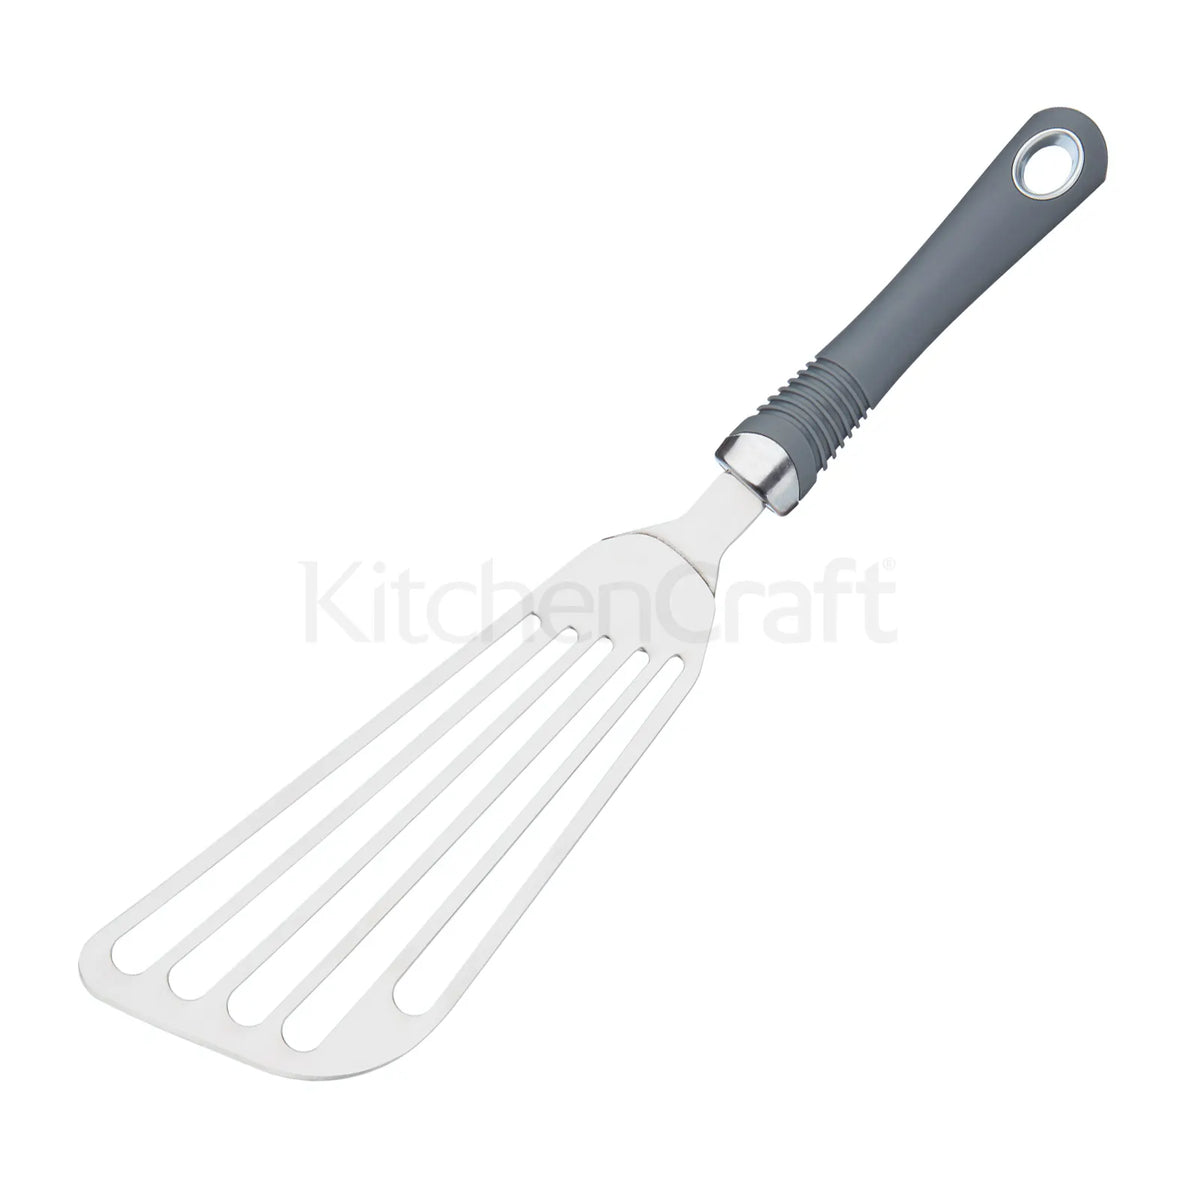 KitchenCraft Stainless Steel Fish Slice